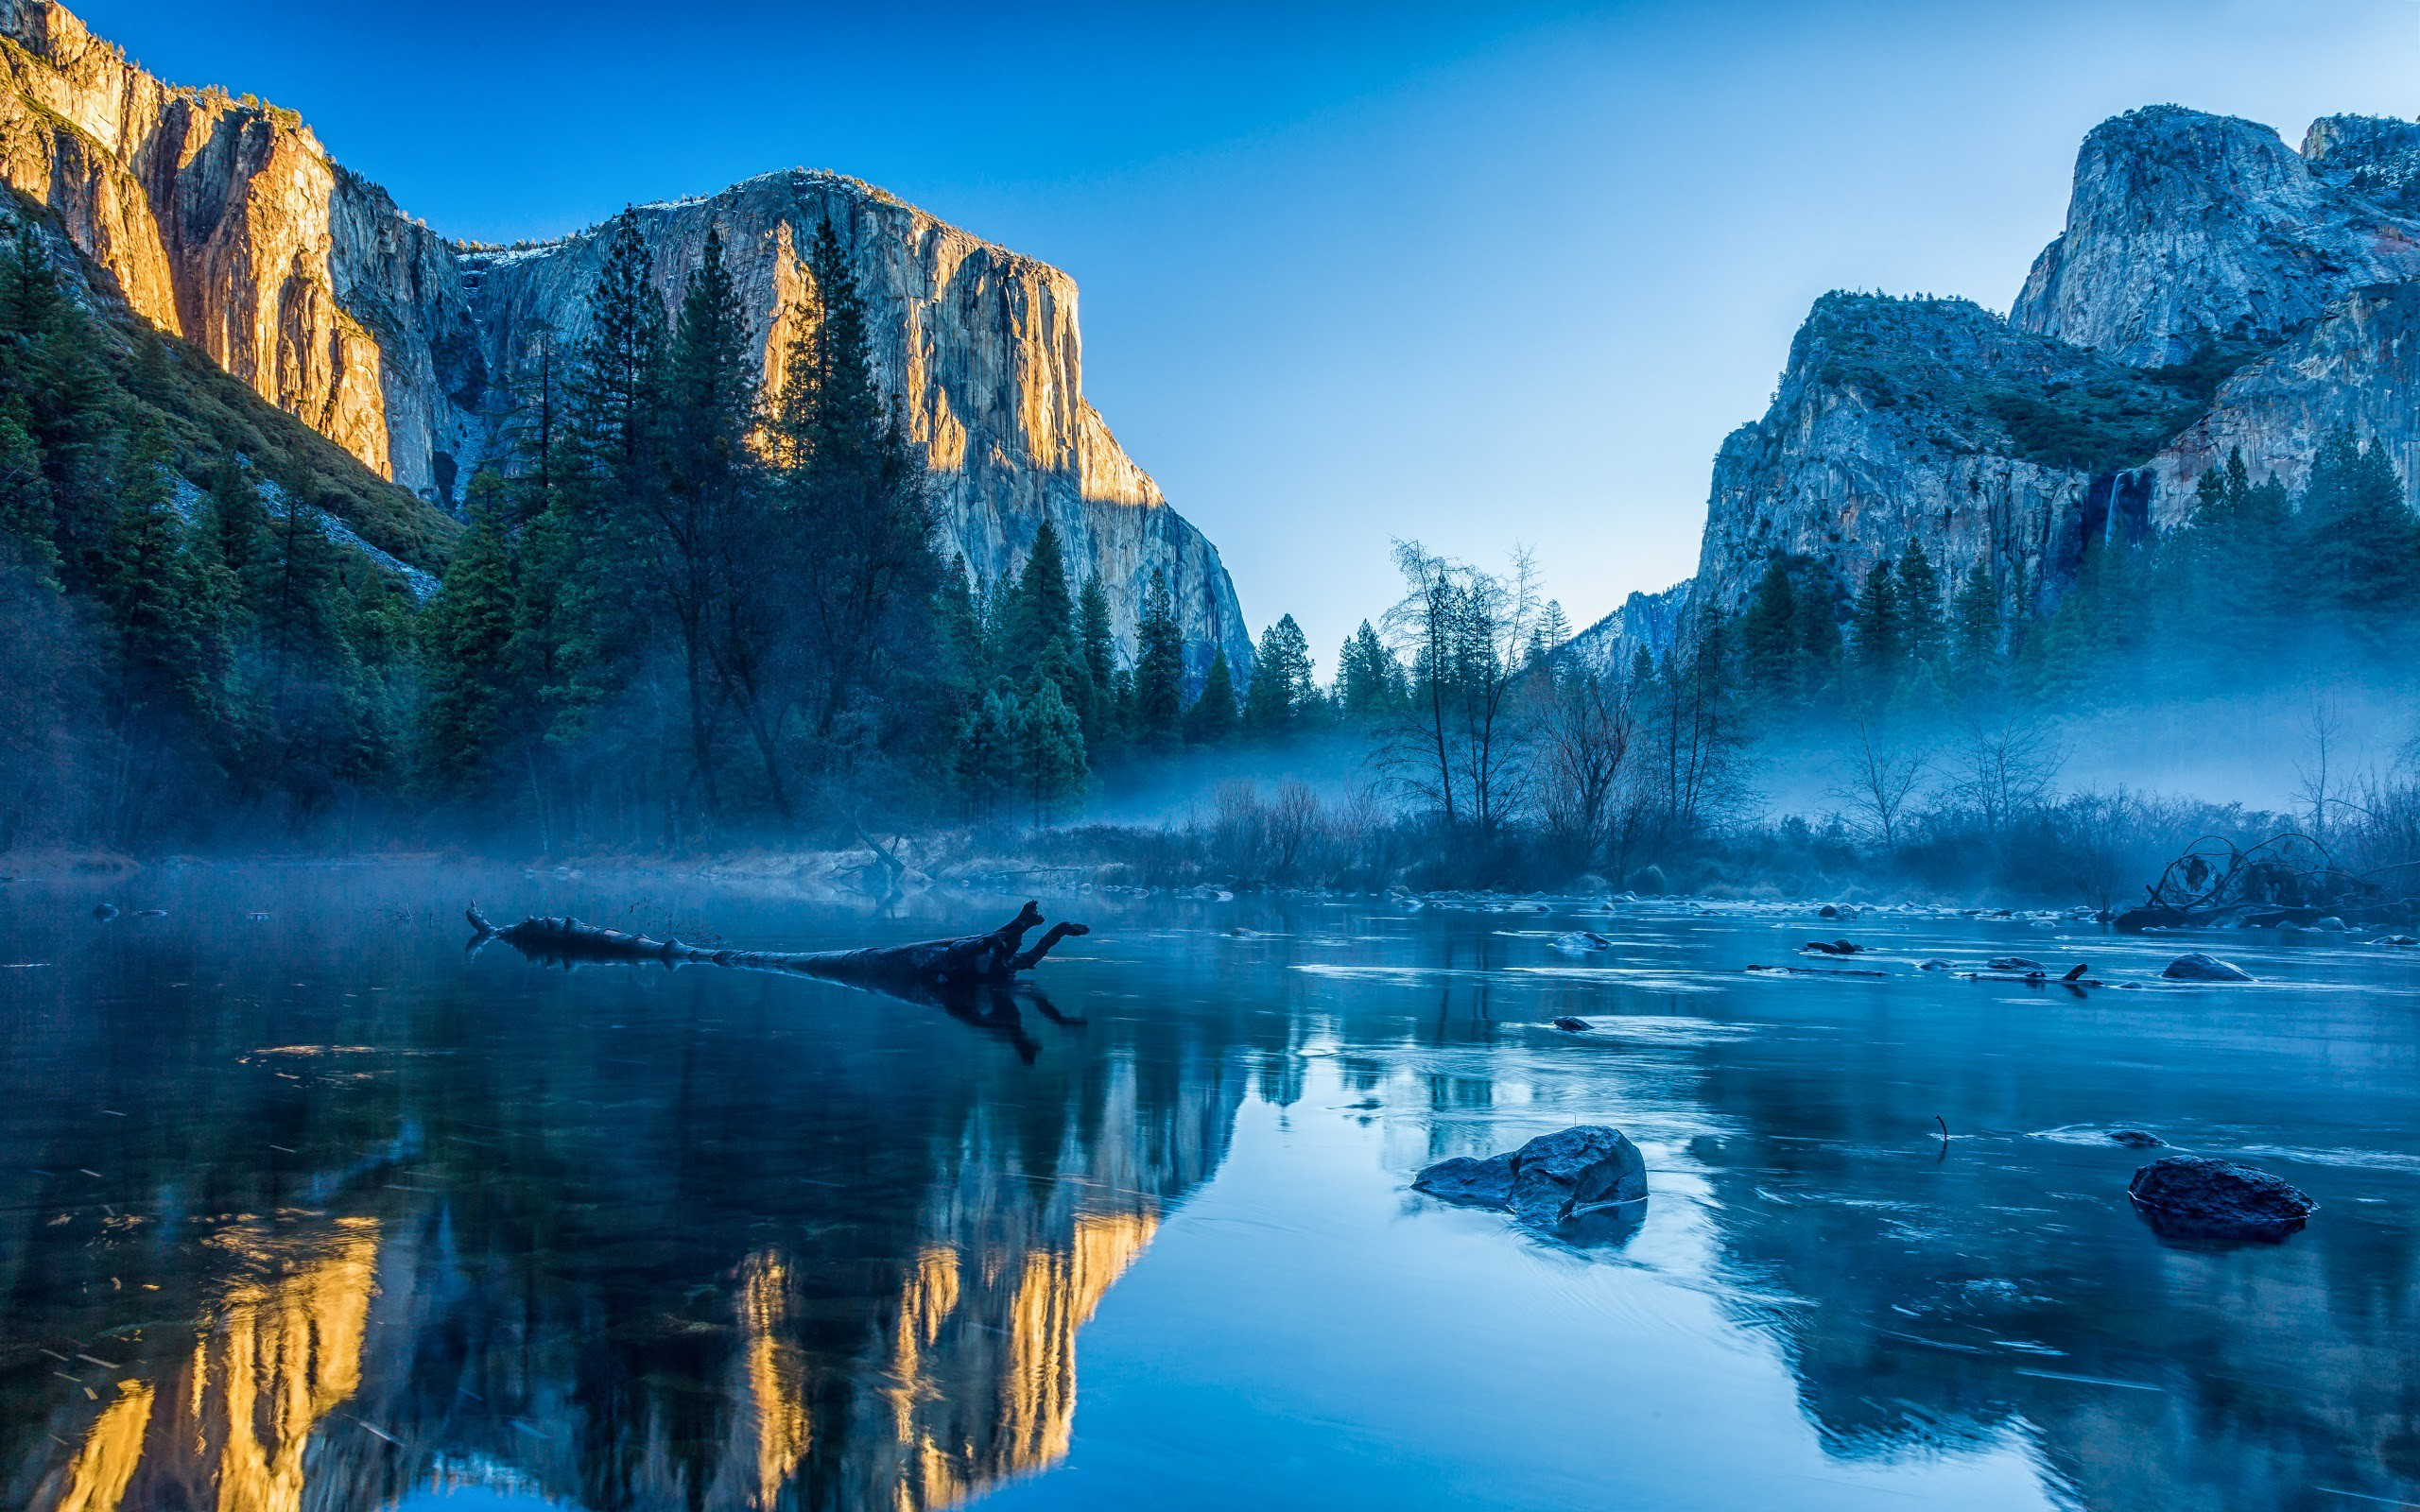 General 2560x1600 Yosemite National Park USA Yosemite Valley California landscape river water Mac OS X reflection mist nature Apple Inc. trees mountains